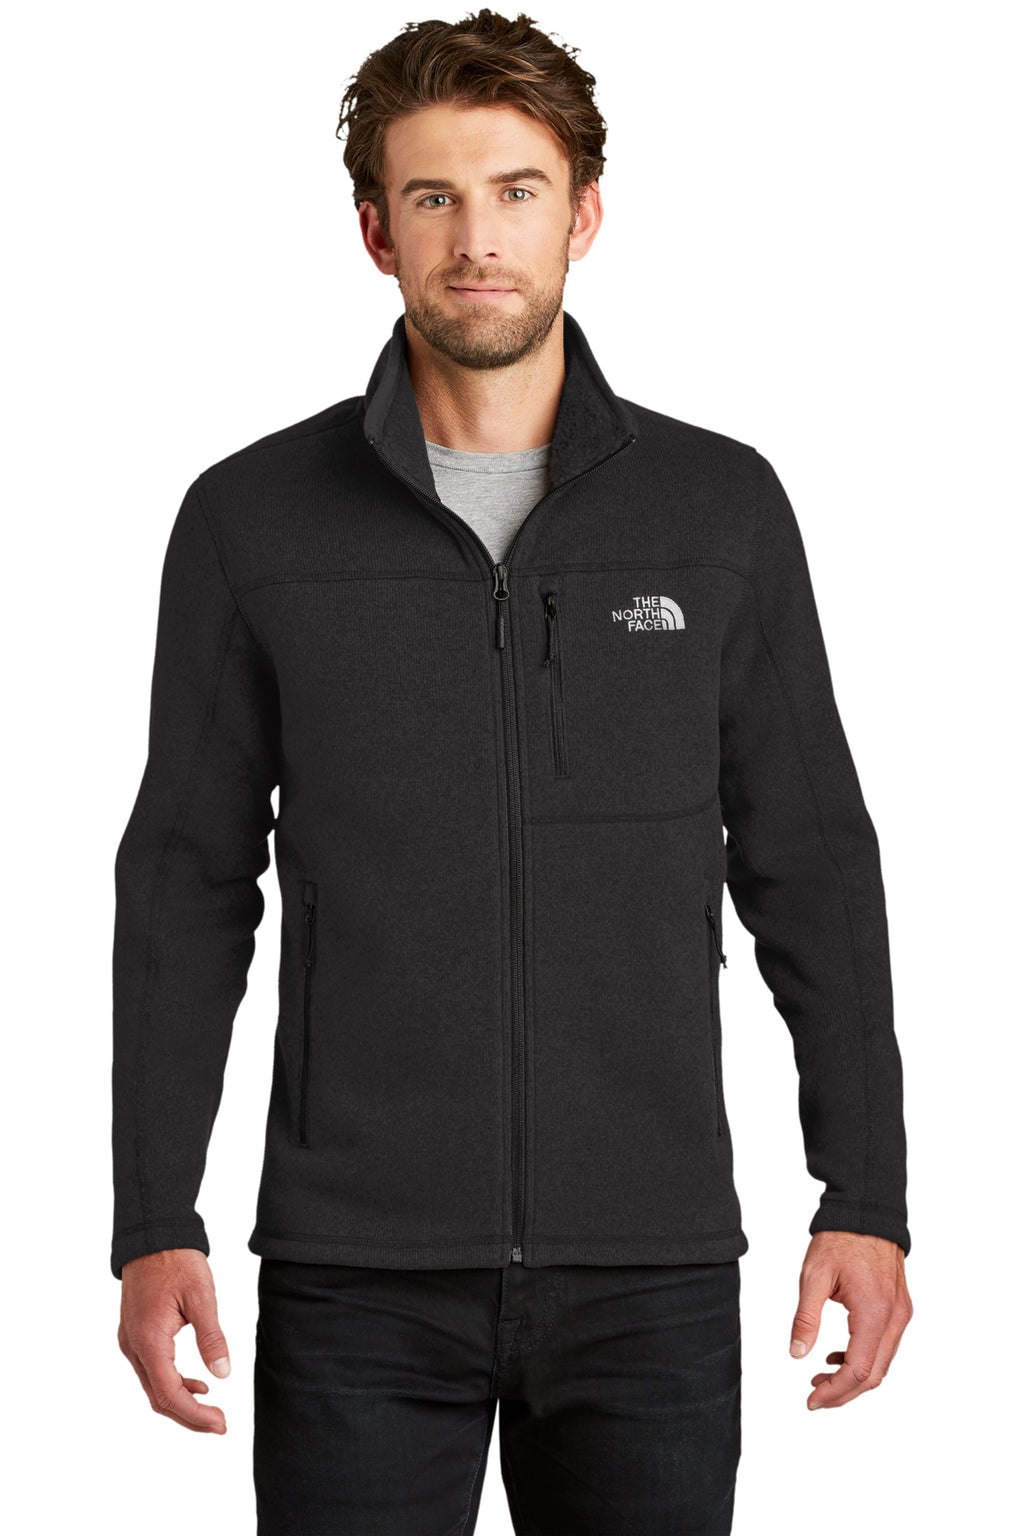 Sweater Fleece - Men's Jacket - North Face NF0A3LH7